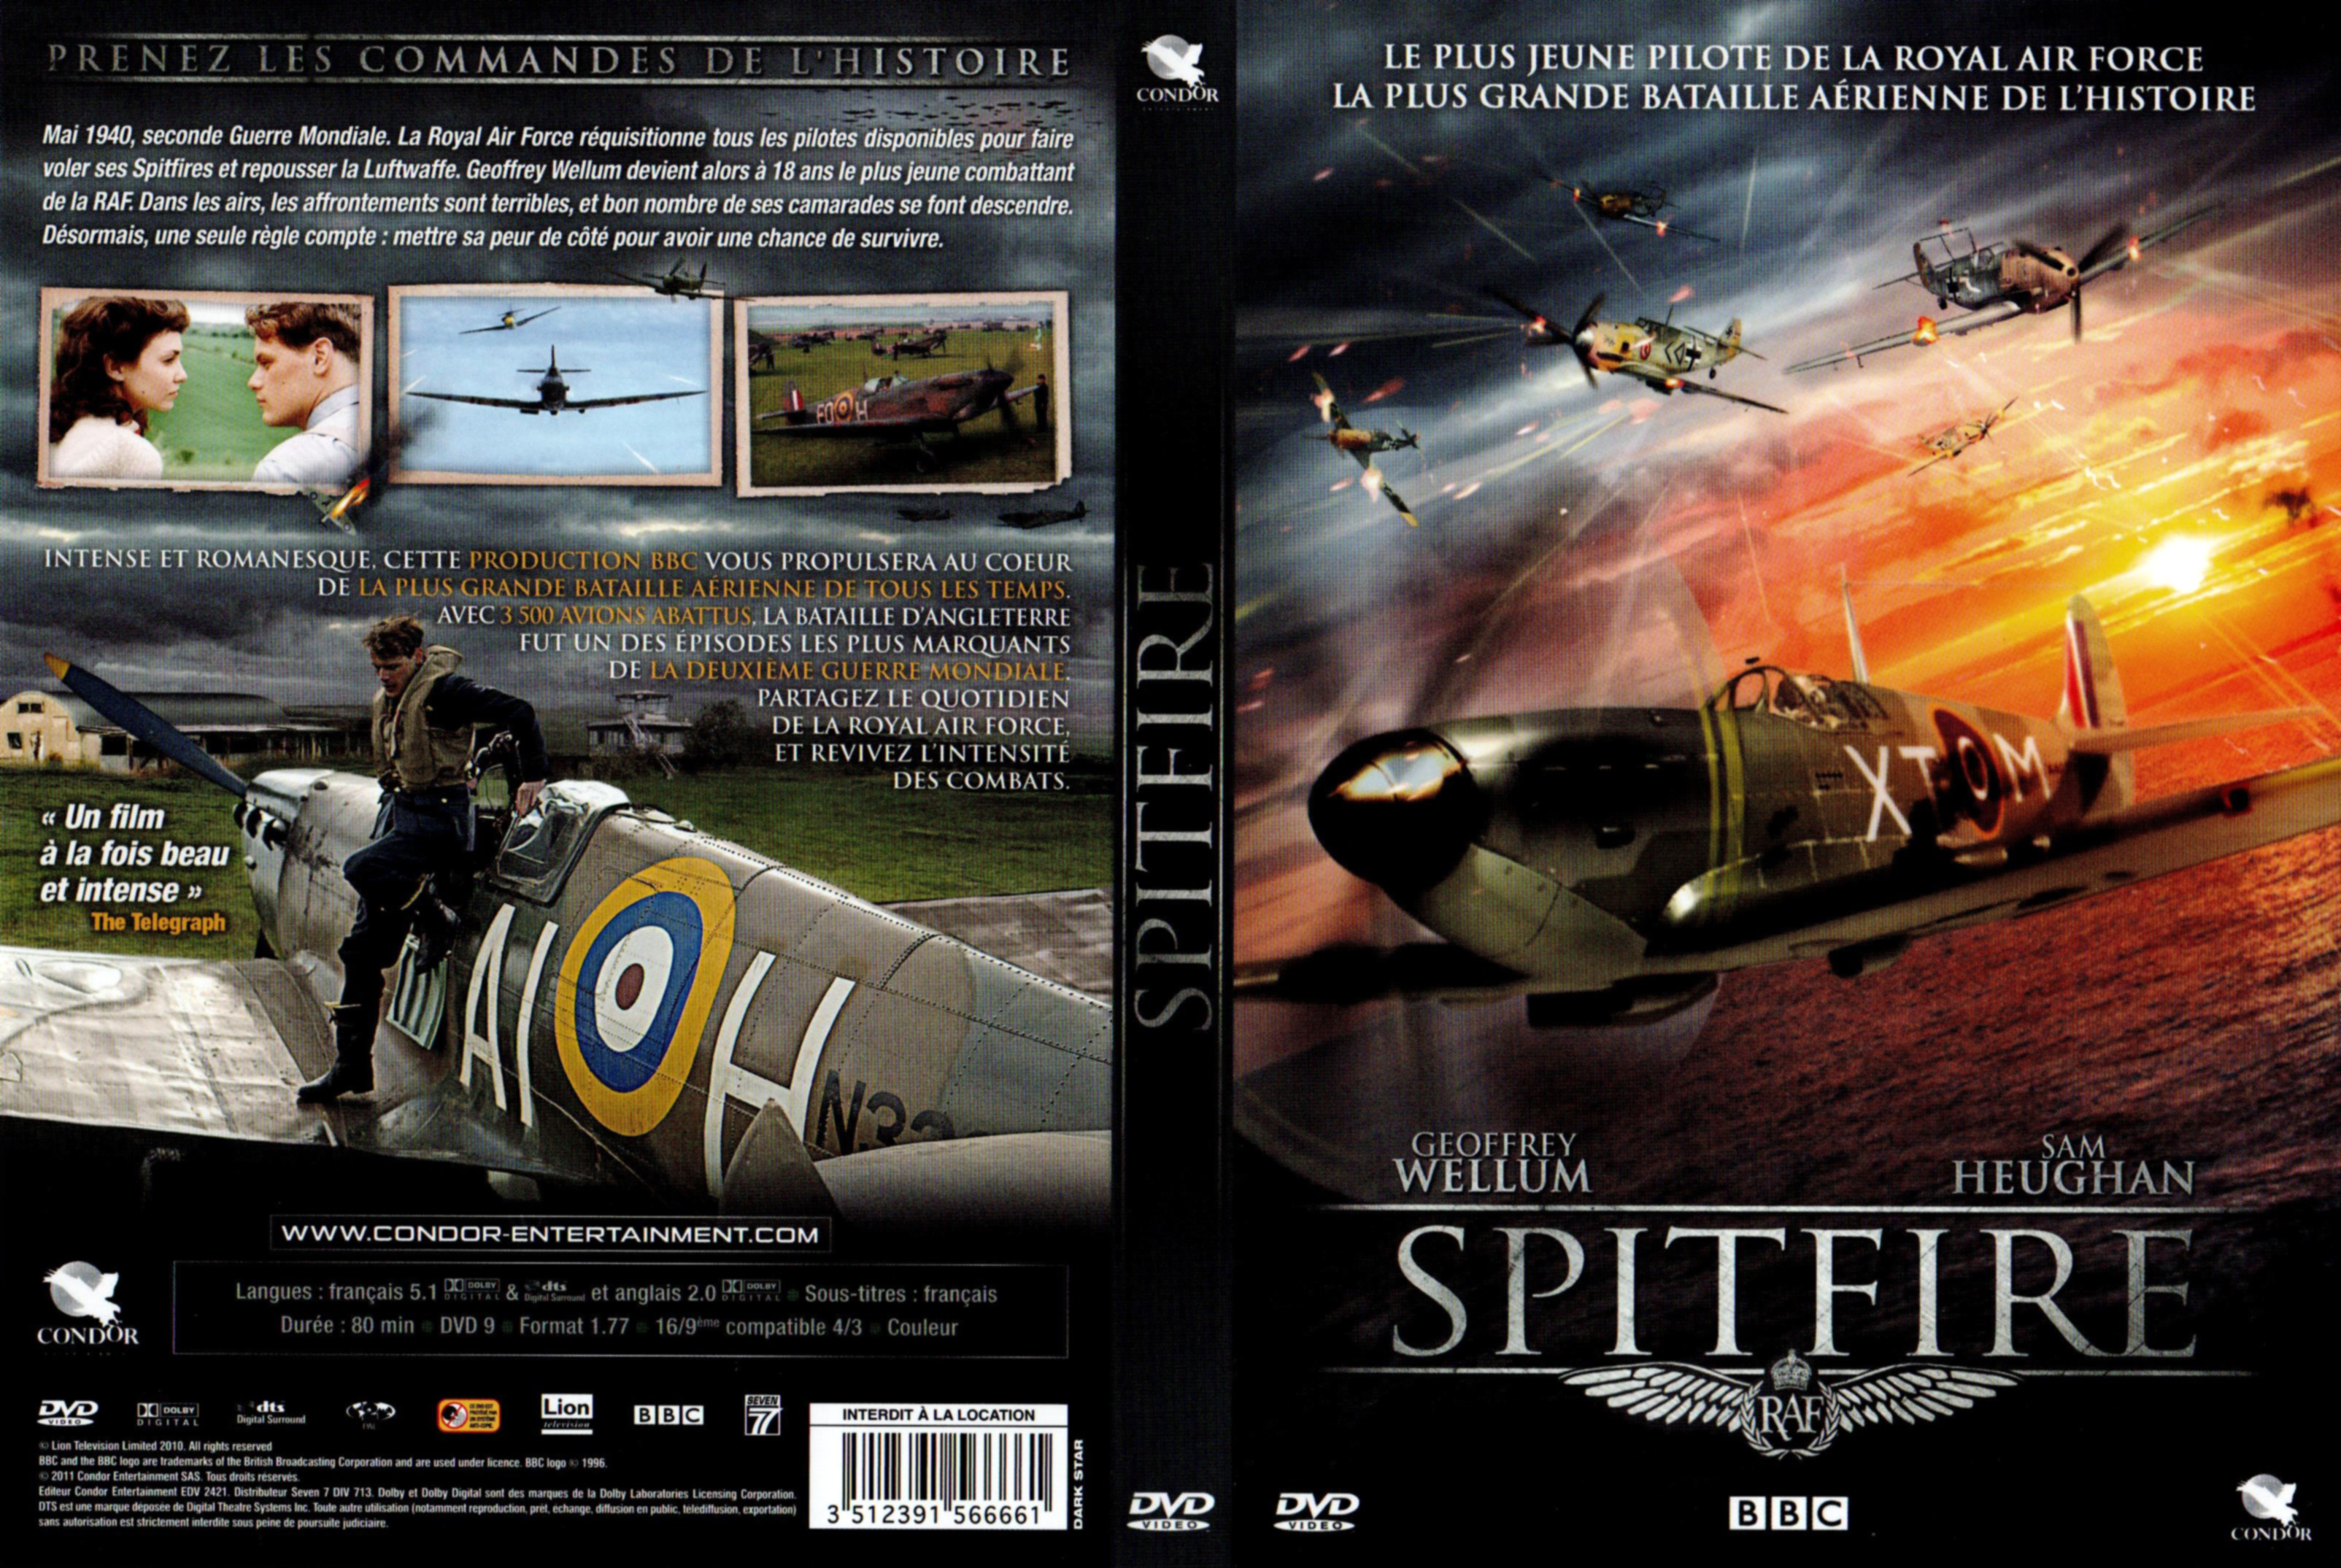 Jaquette DVD Spitfire